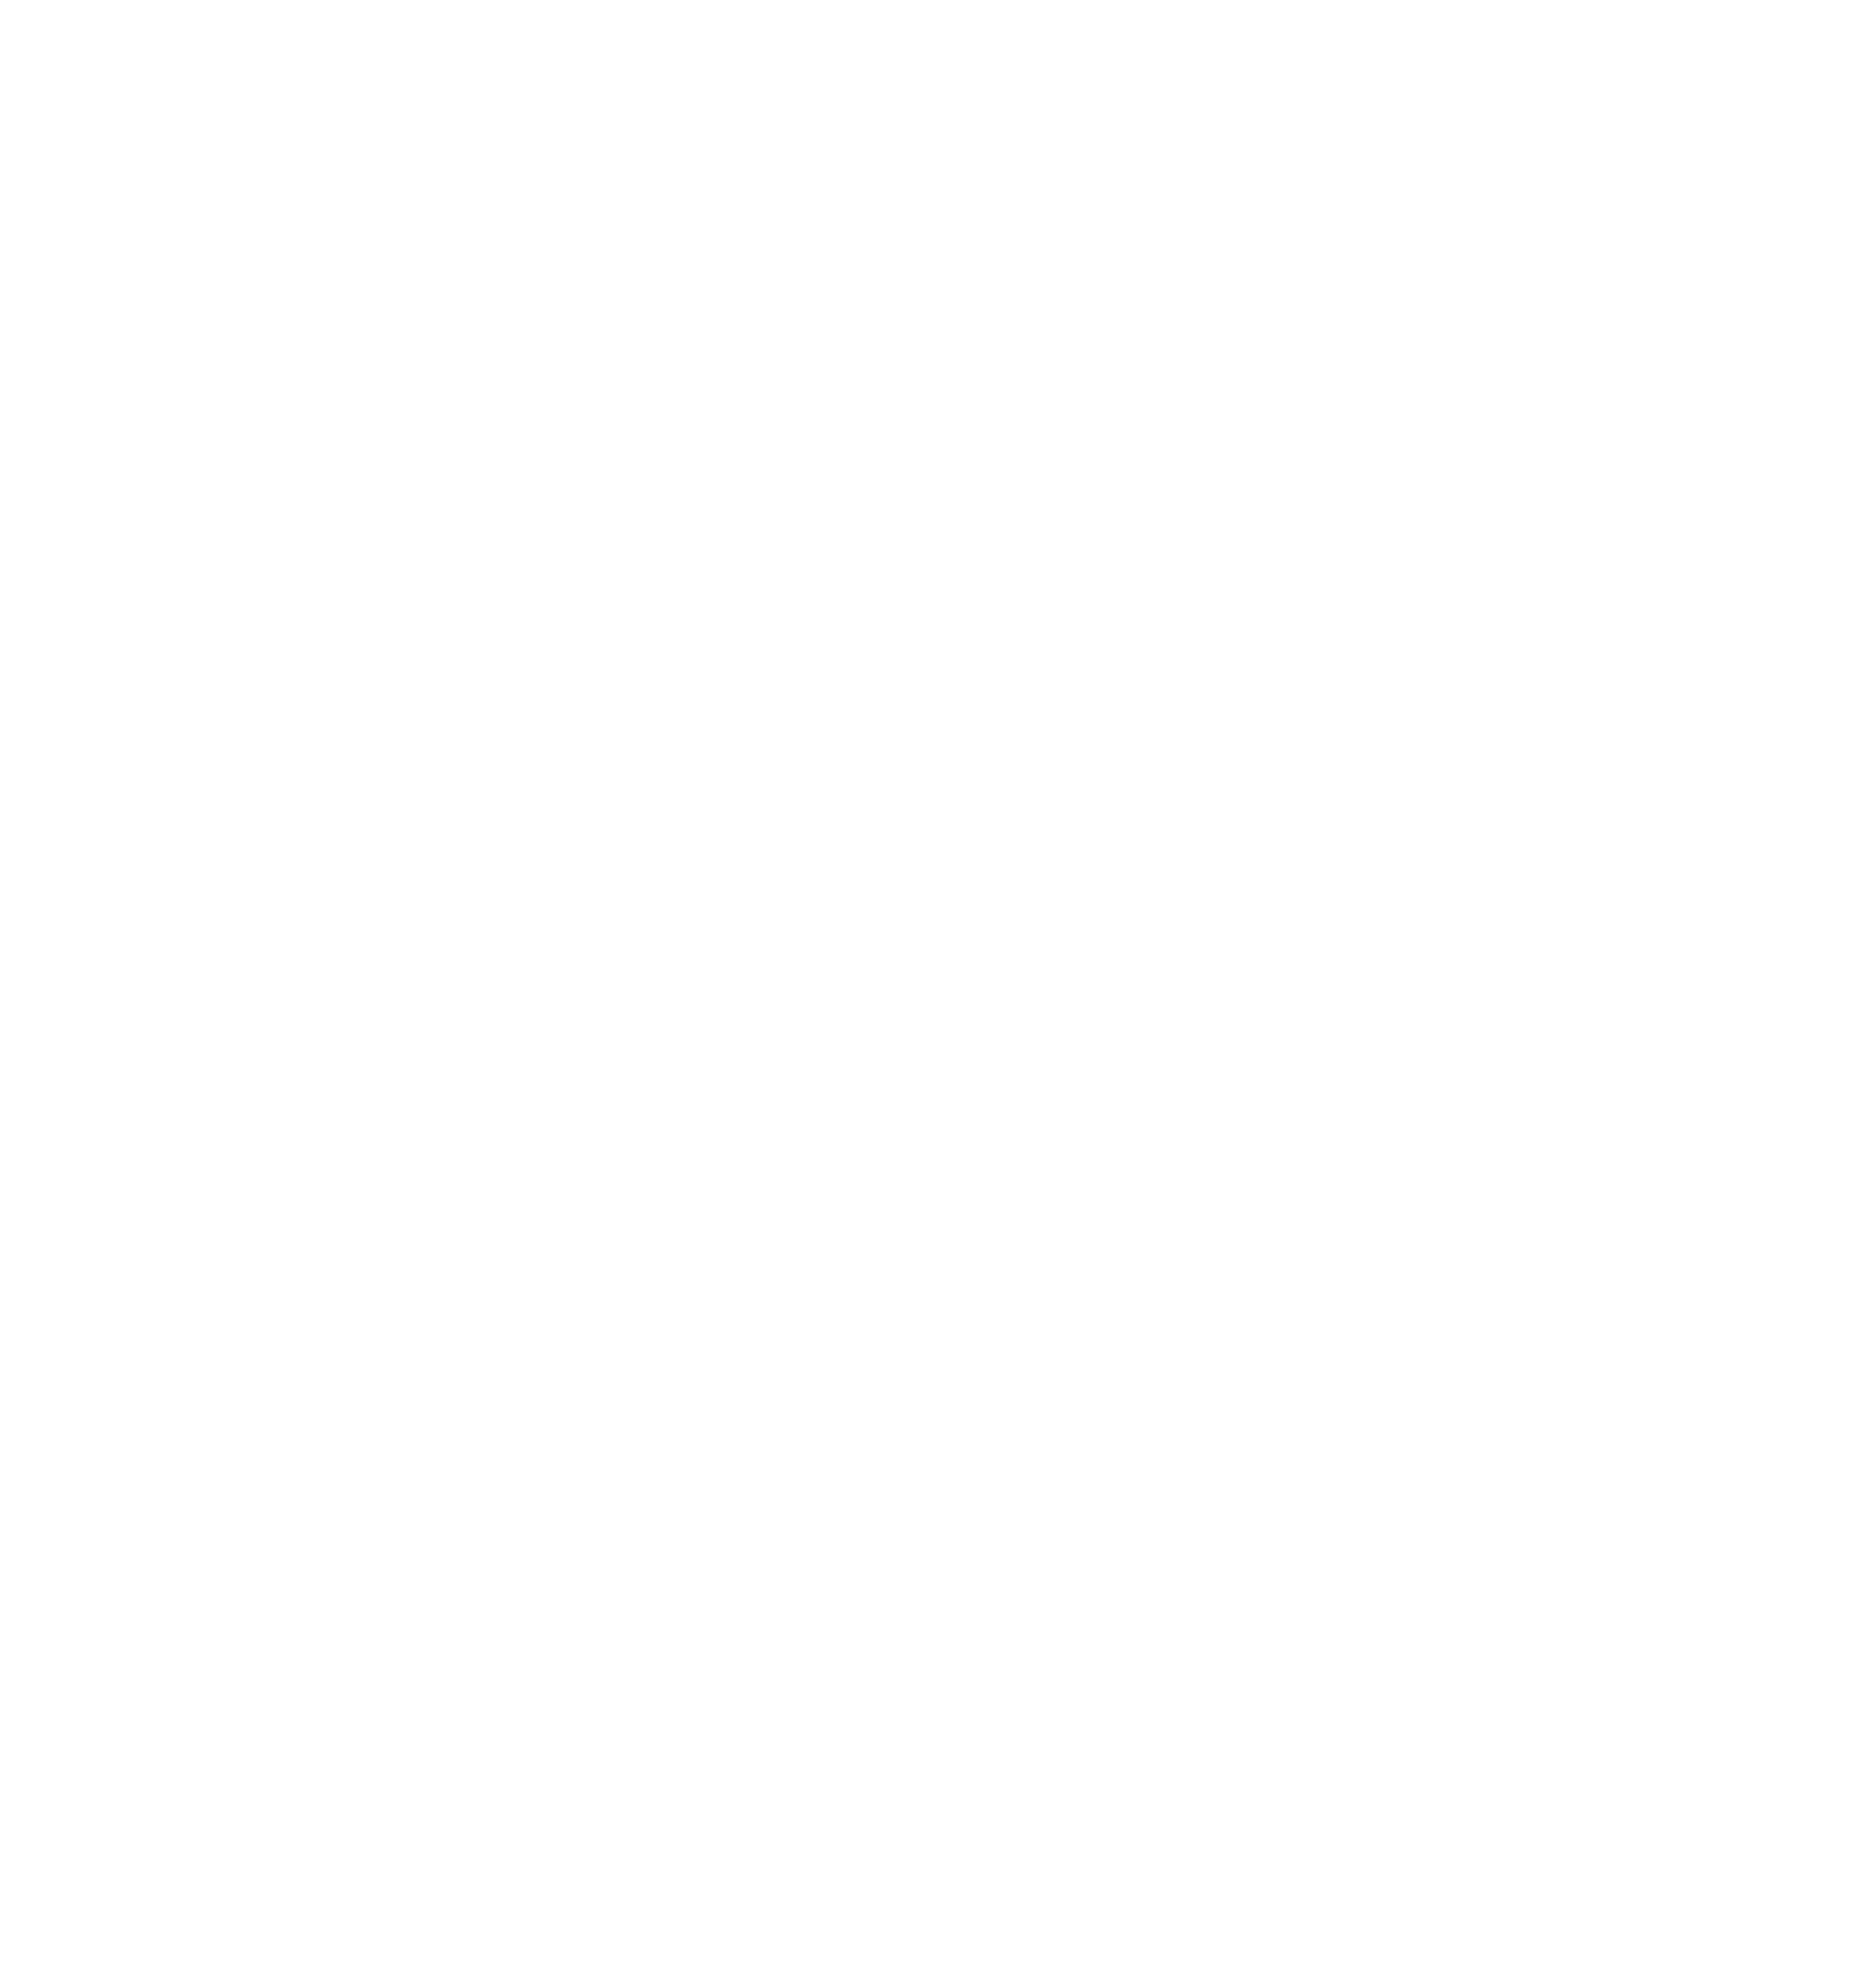 Elemental Movement